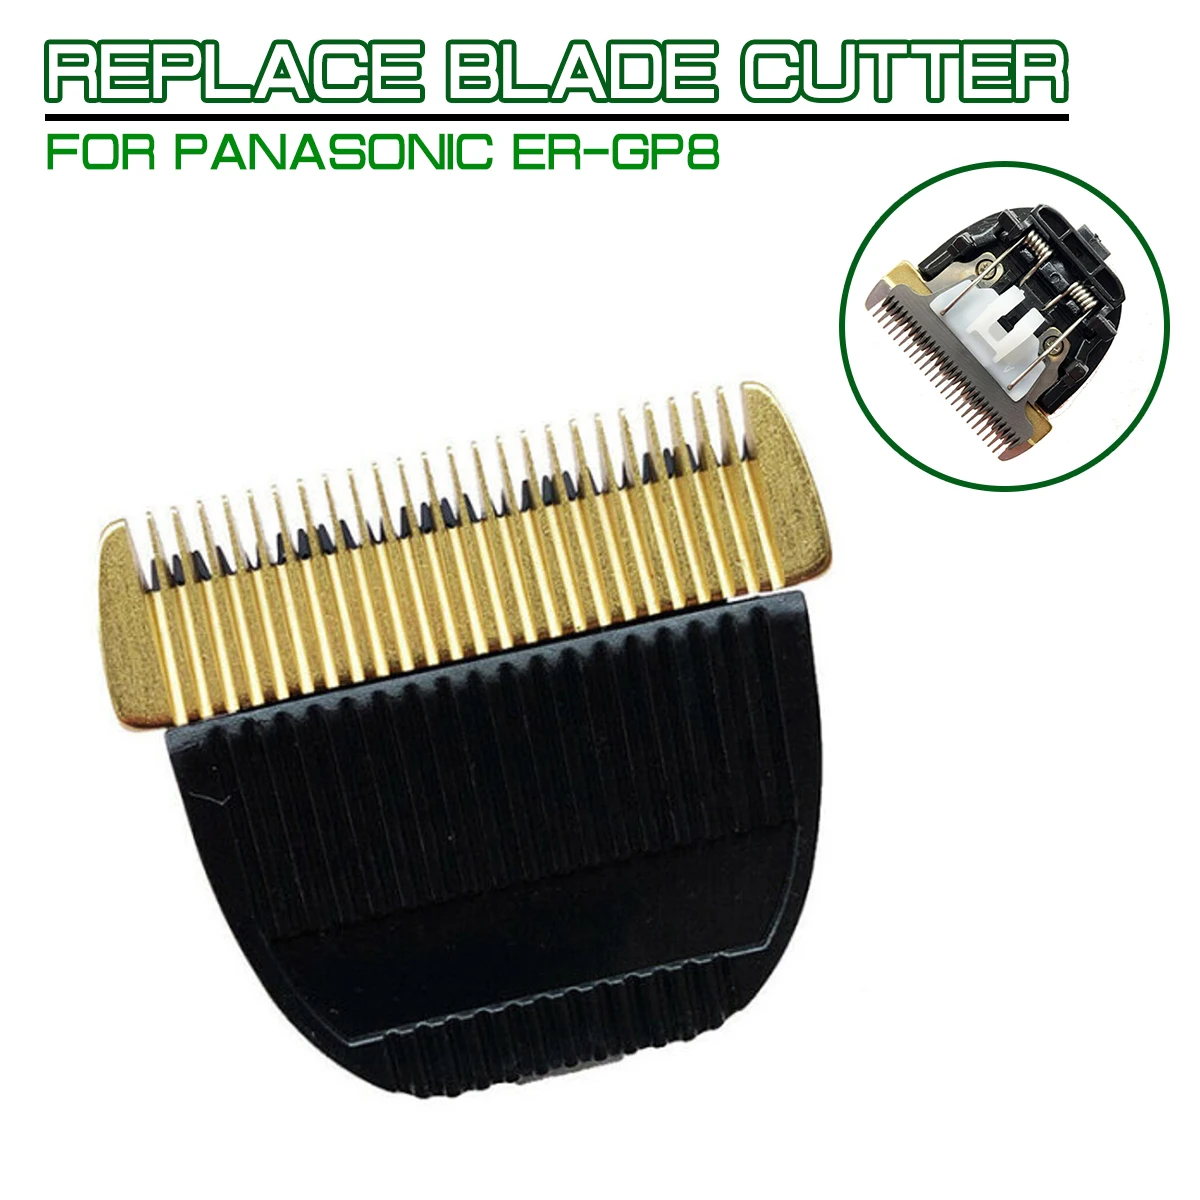 

Ceramic Titanium Replace Blade Cutter Head For Panasonic ER-GP8 1610 1611 1511 153 154 160 VG101 Hair Clipper Trimmer Razor Tool